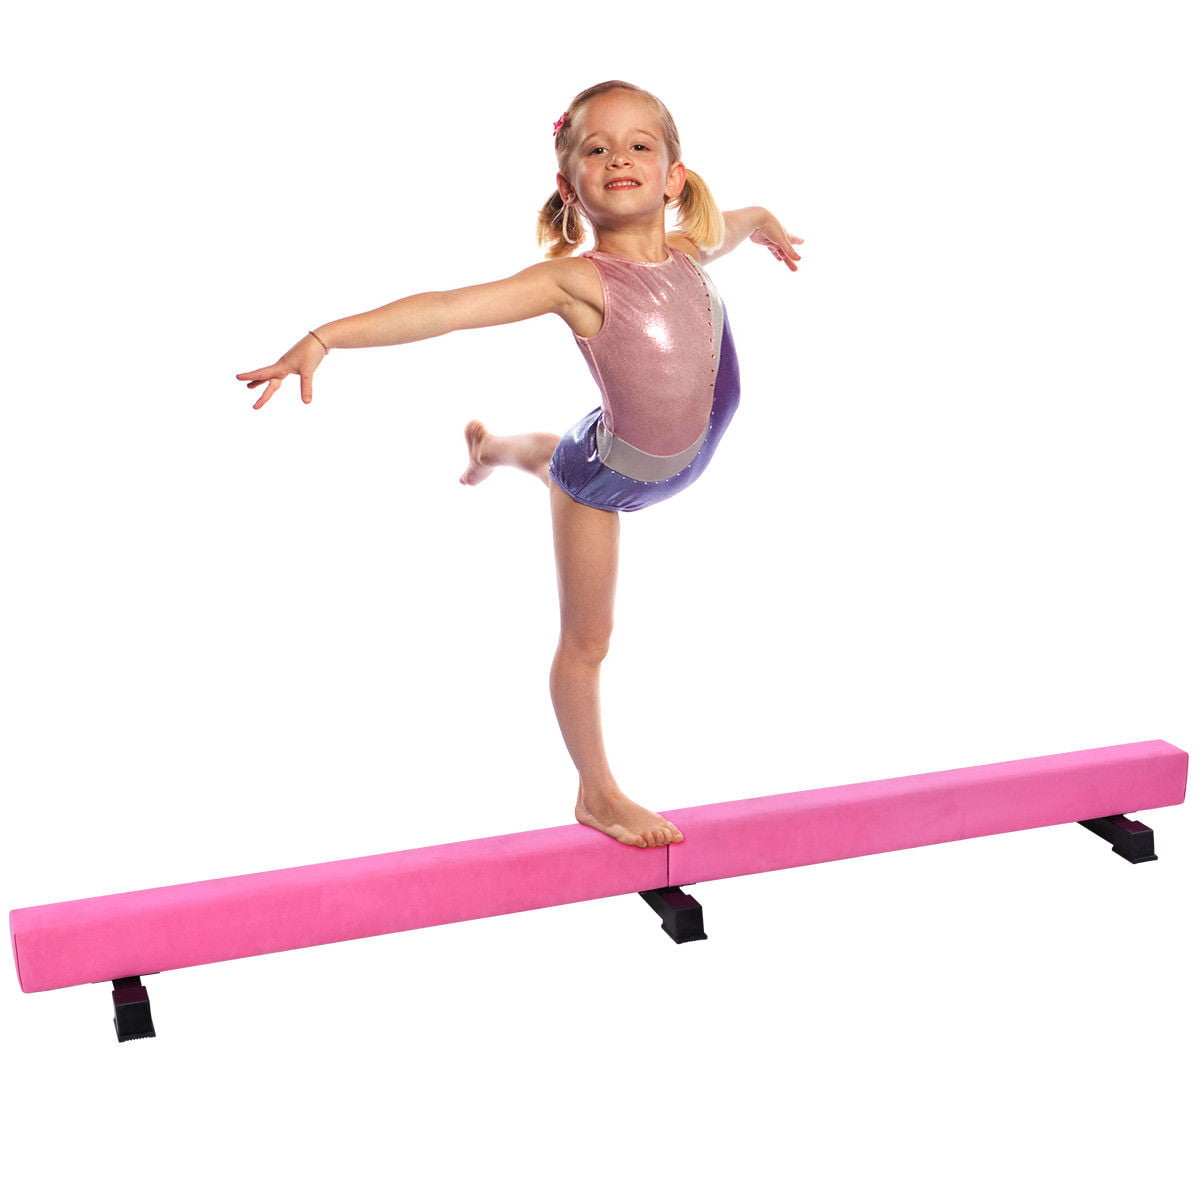 6 Feet Long Nimble Sports Purple Suede Gymnastics Balance Beam Made in the USA 